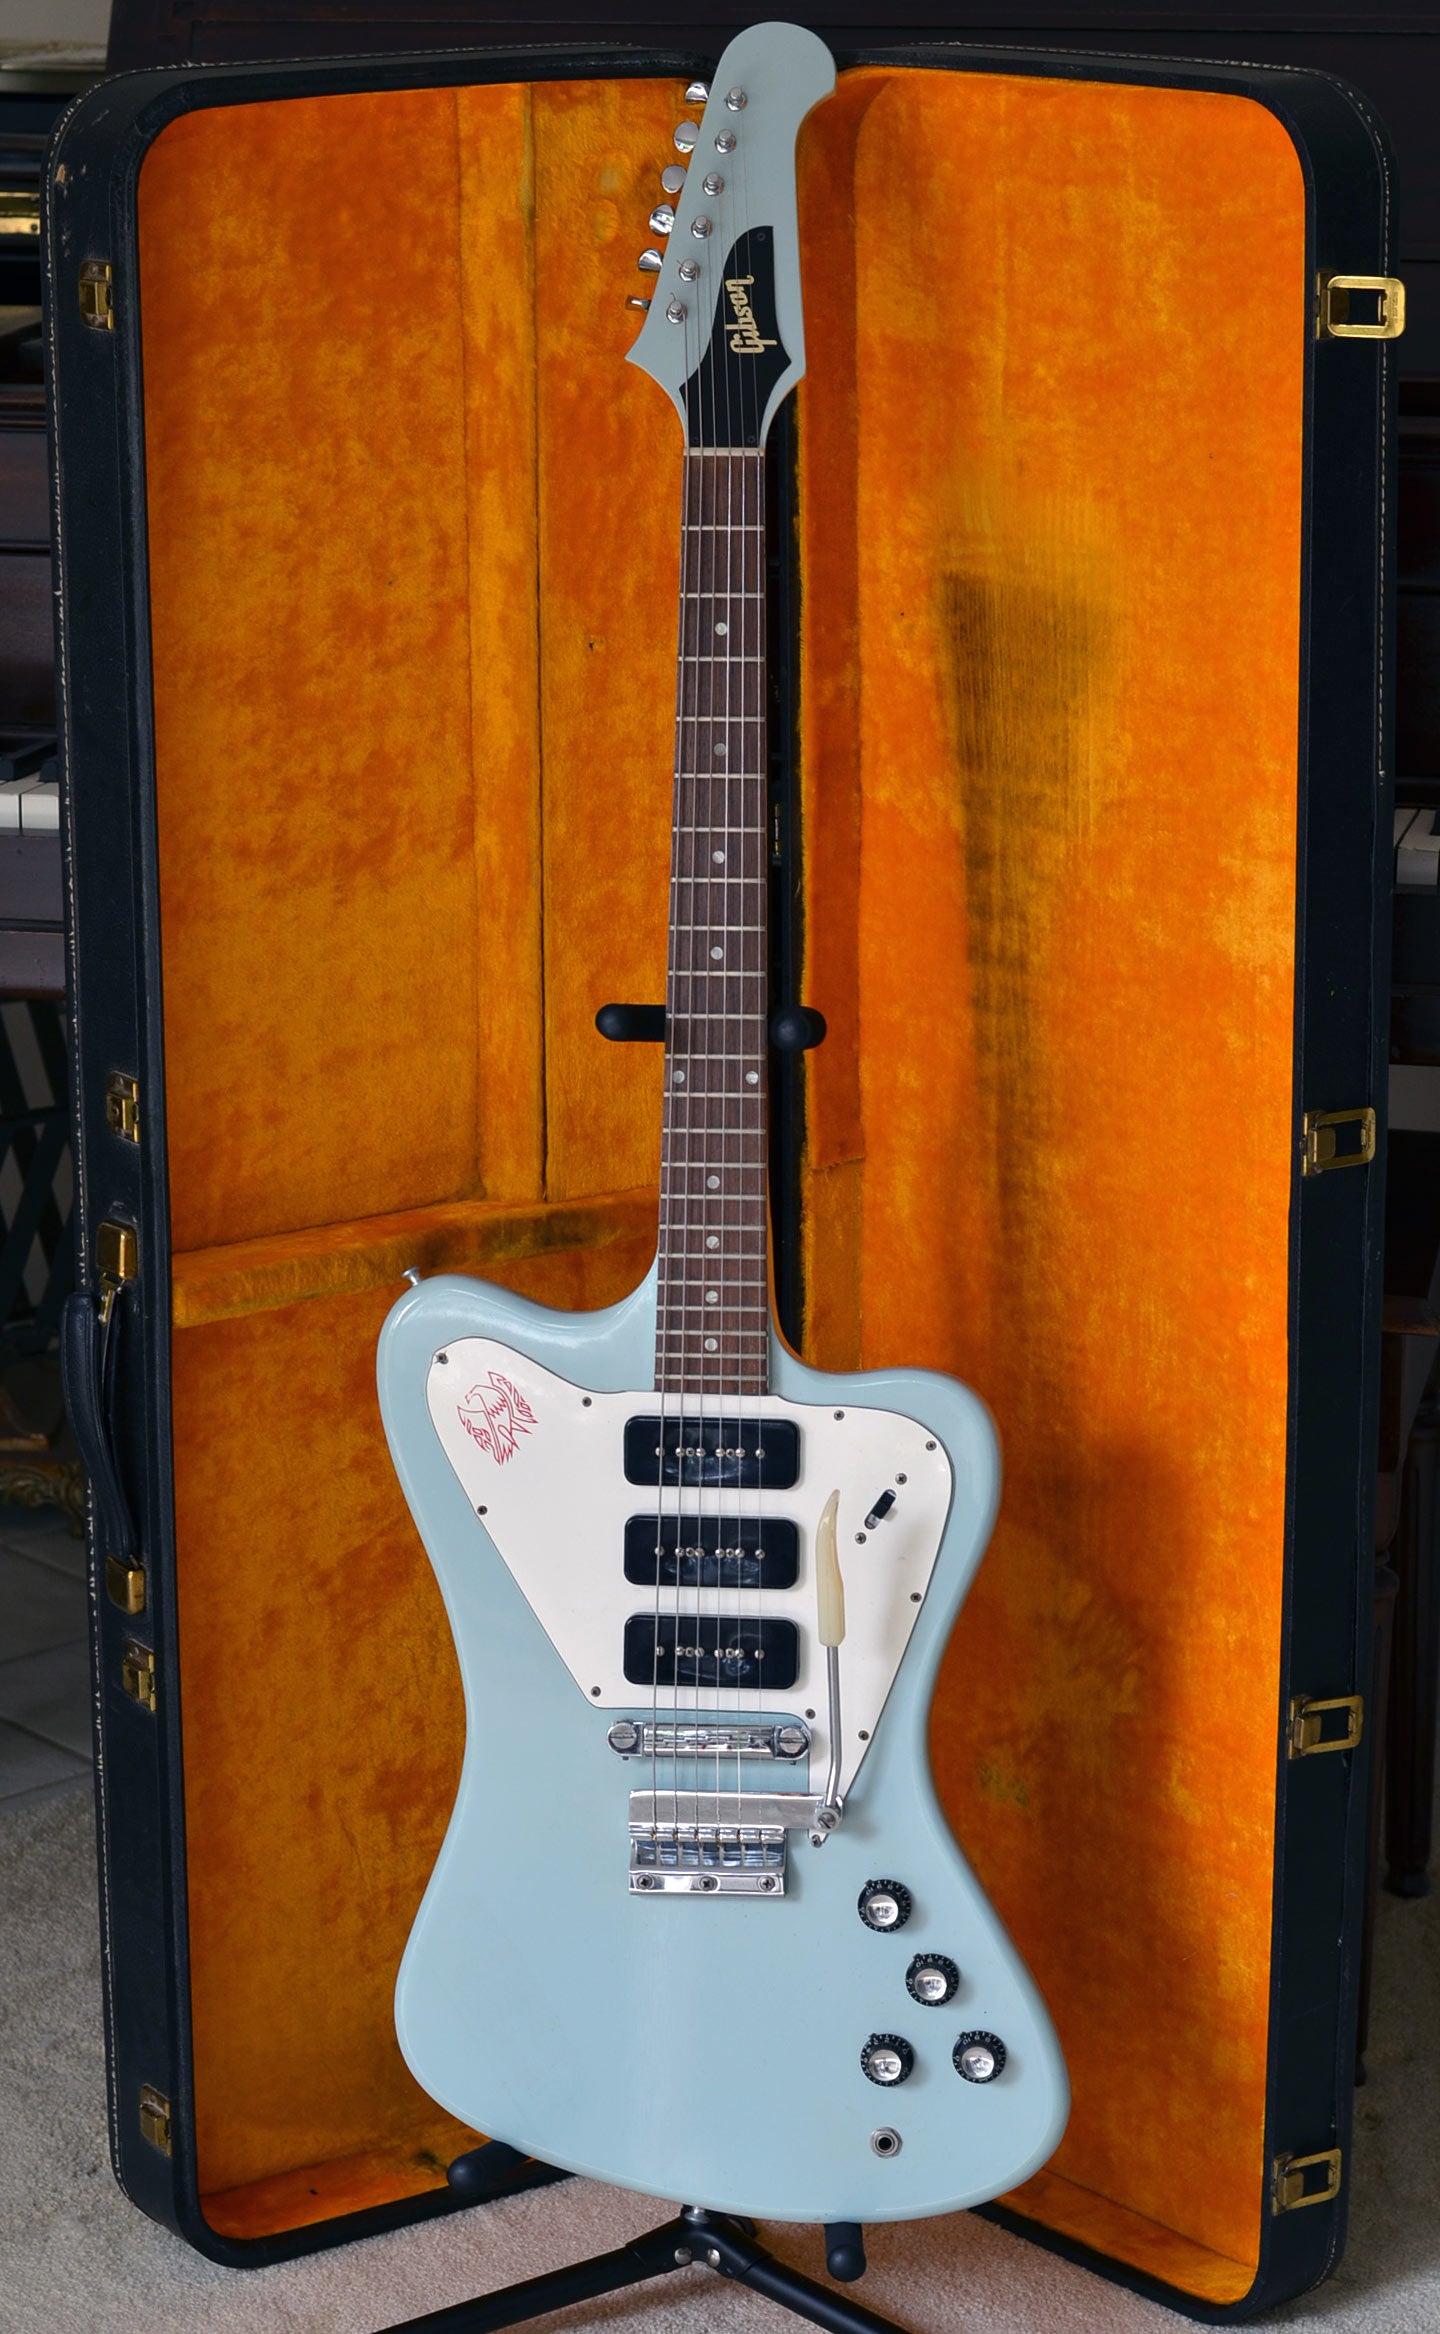 Vintage Gibson Firebird guitar